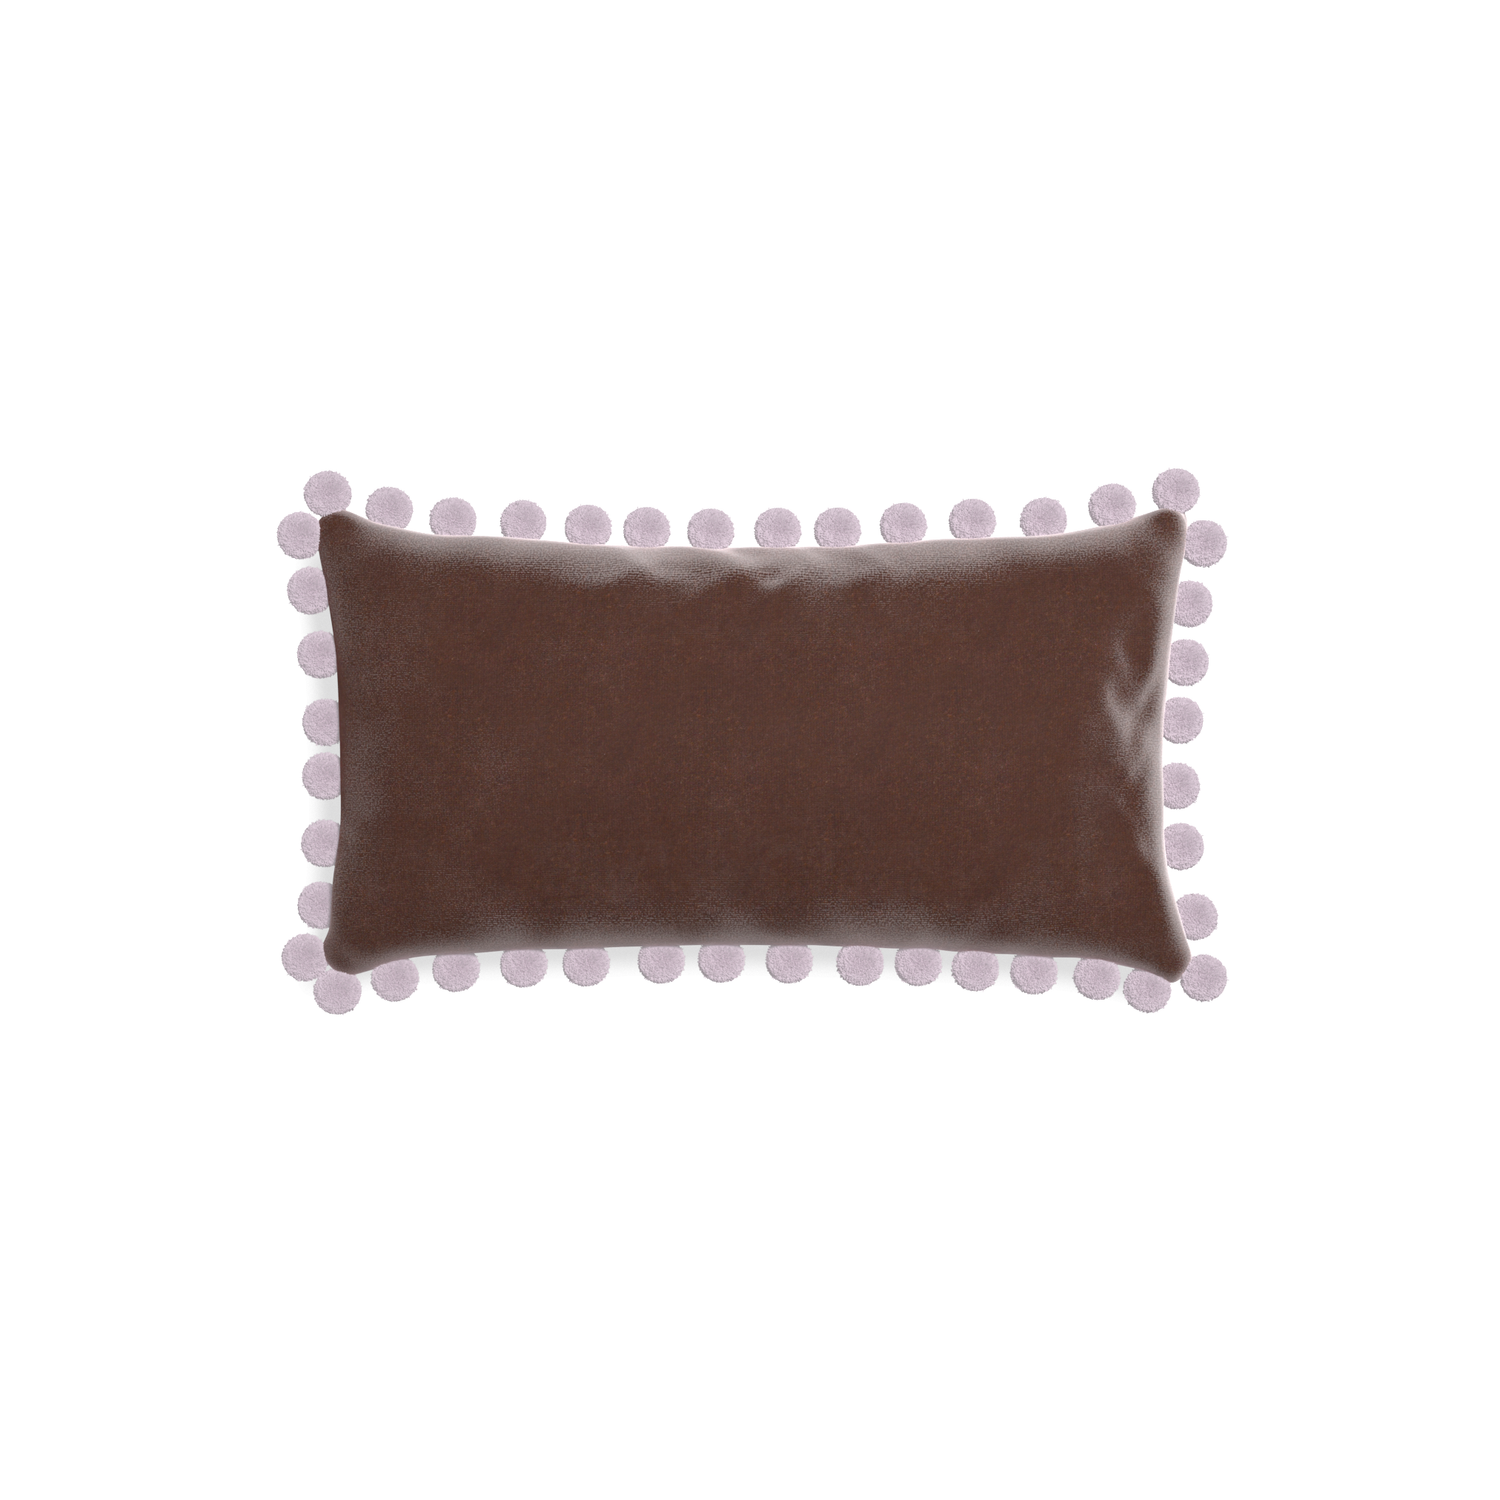 rectangle brown velvet pillow with lilac pom poms